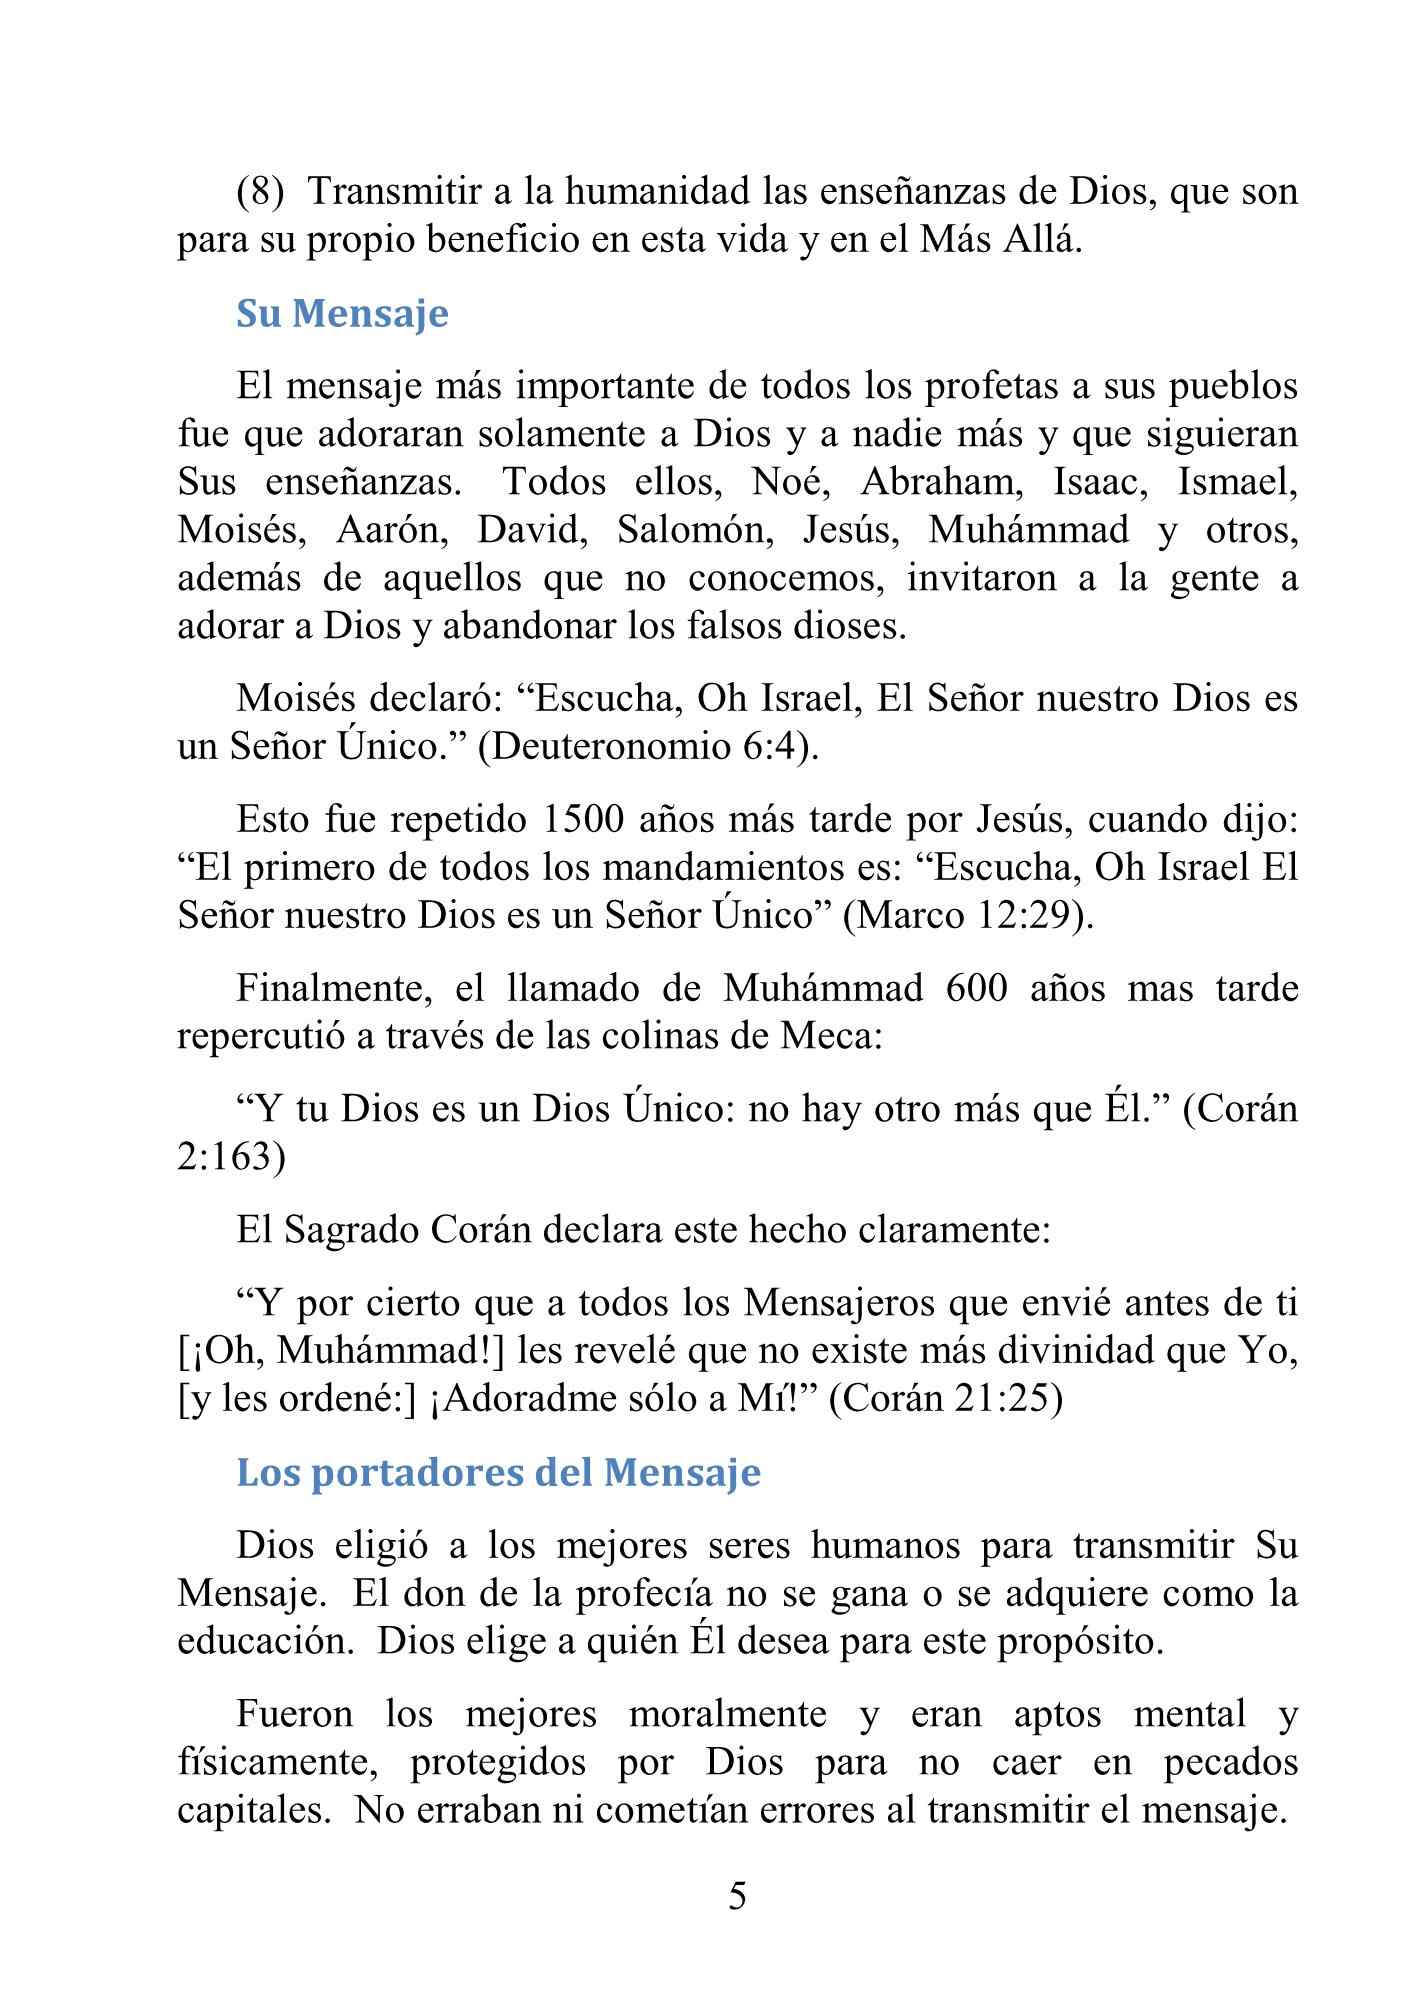 إسباني - الإيمان بالرسل - La Creencia en los Profetas.pdf, 6-Sayfa 